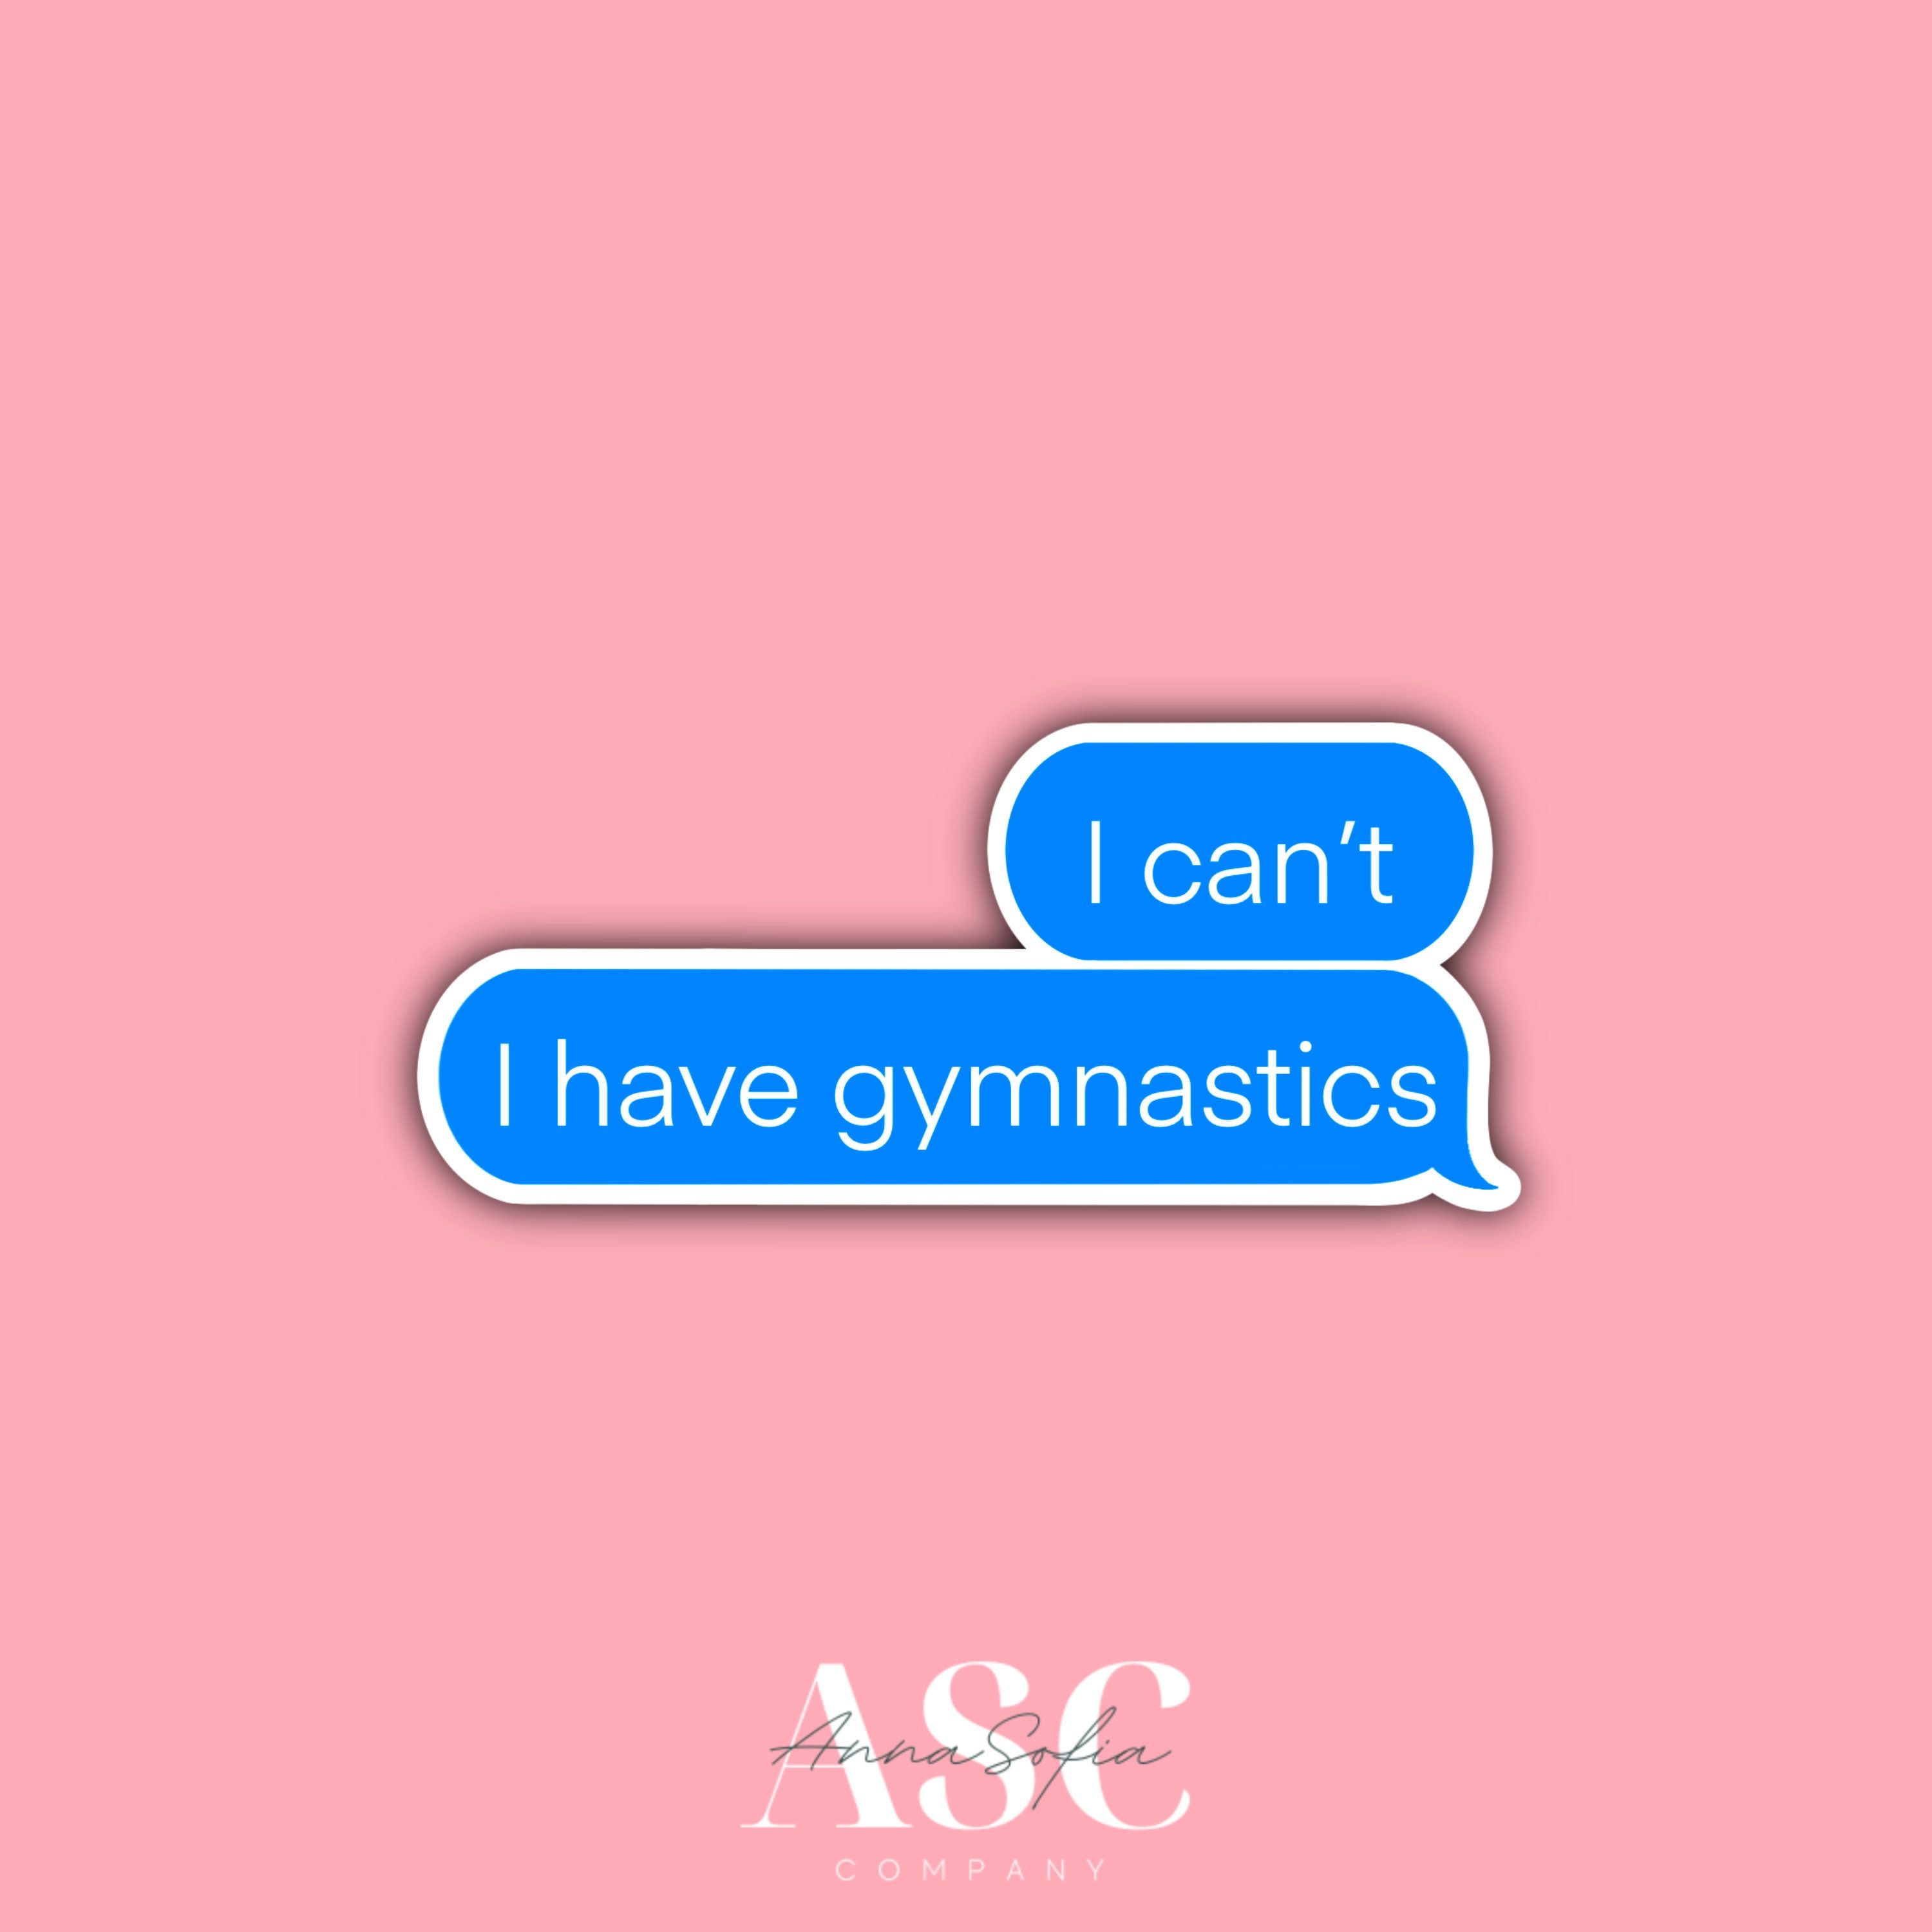 I can't have gymnastics - Gymnastics